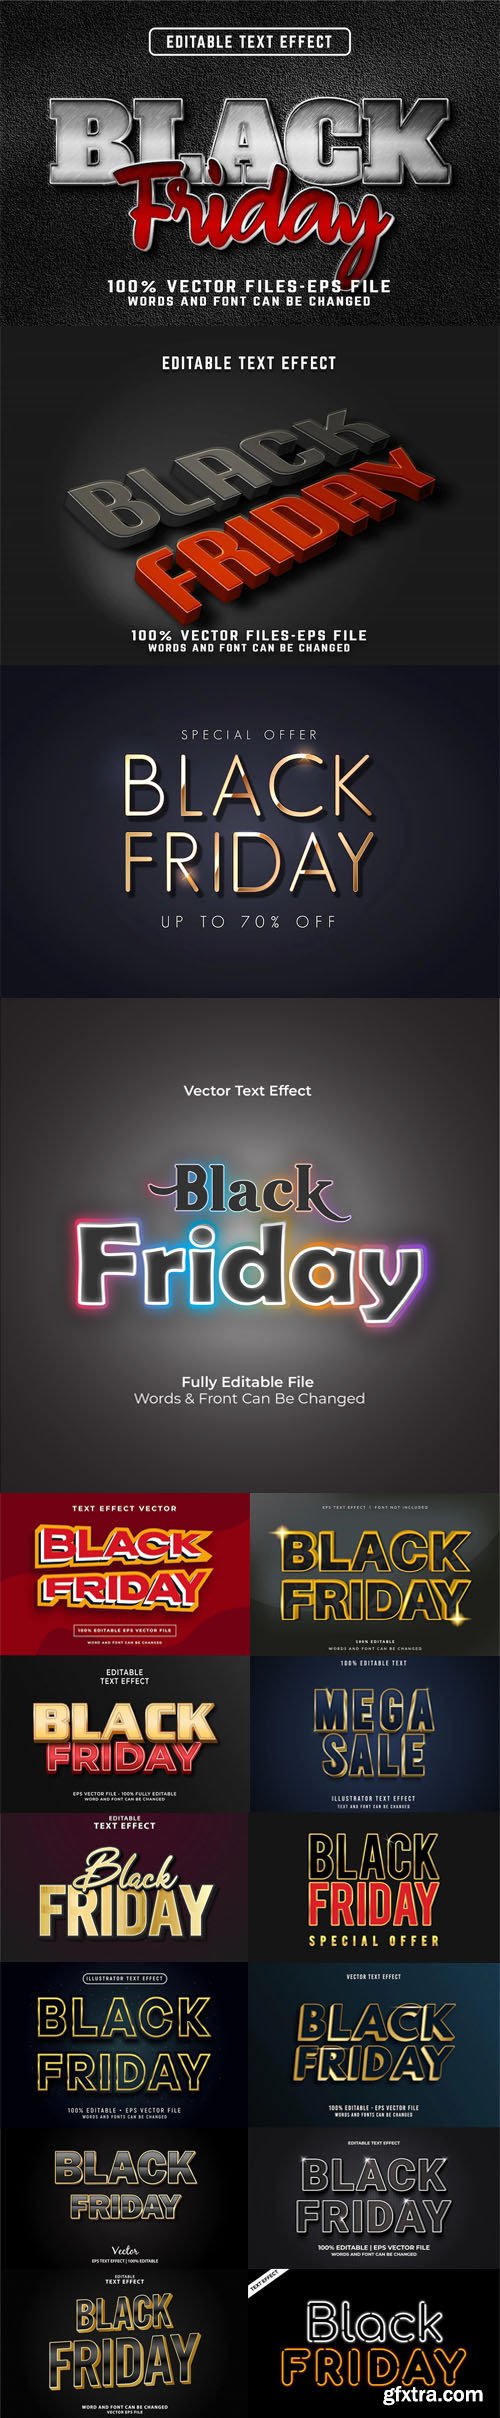 Modern Black Friday 3D Text Effects Vector Templates [Vol.5]